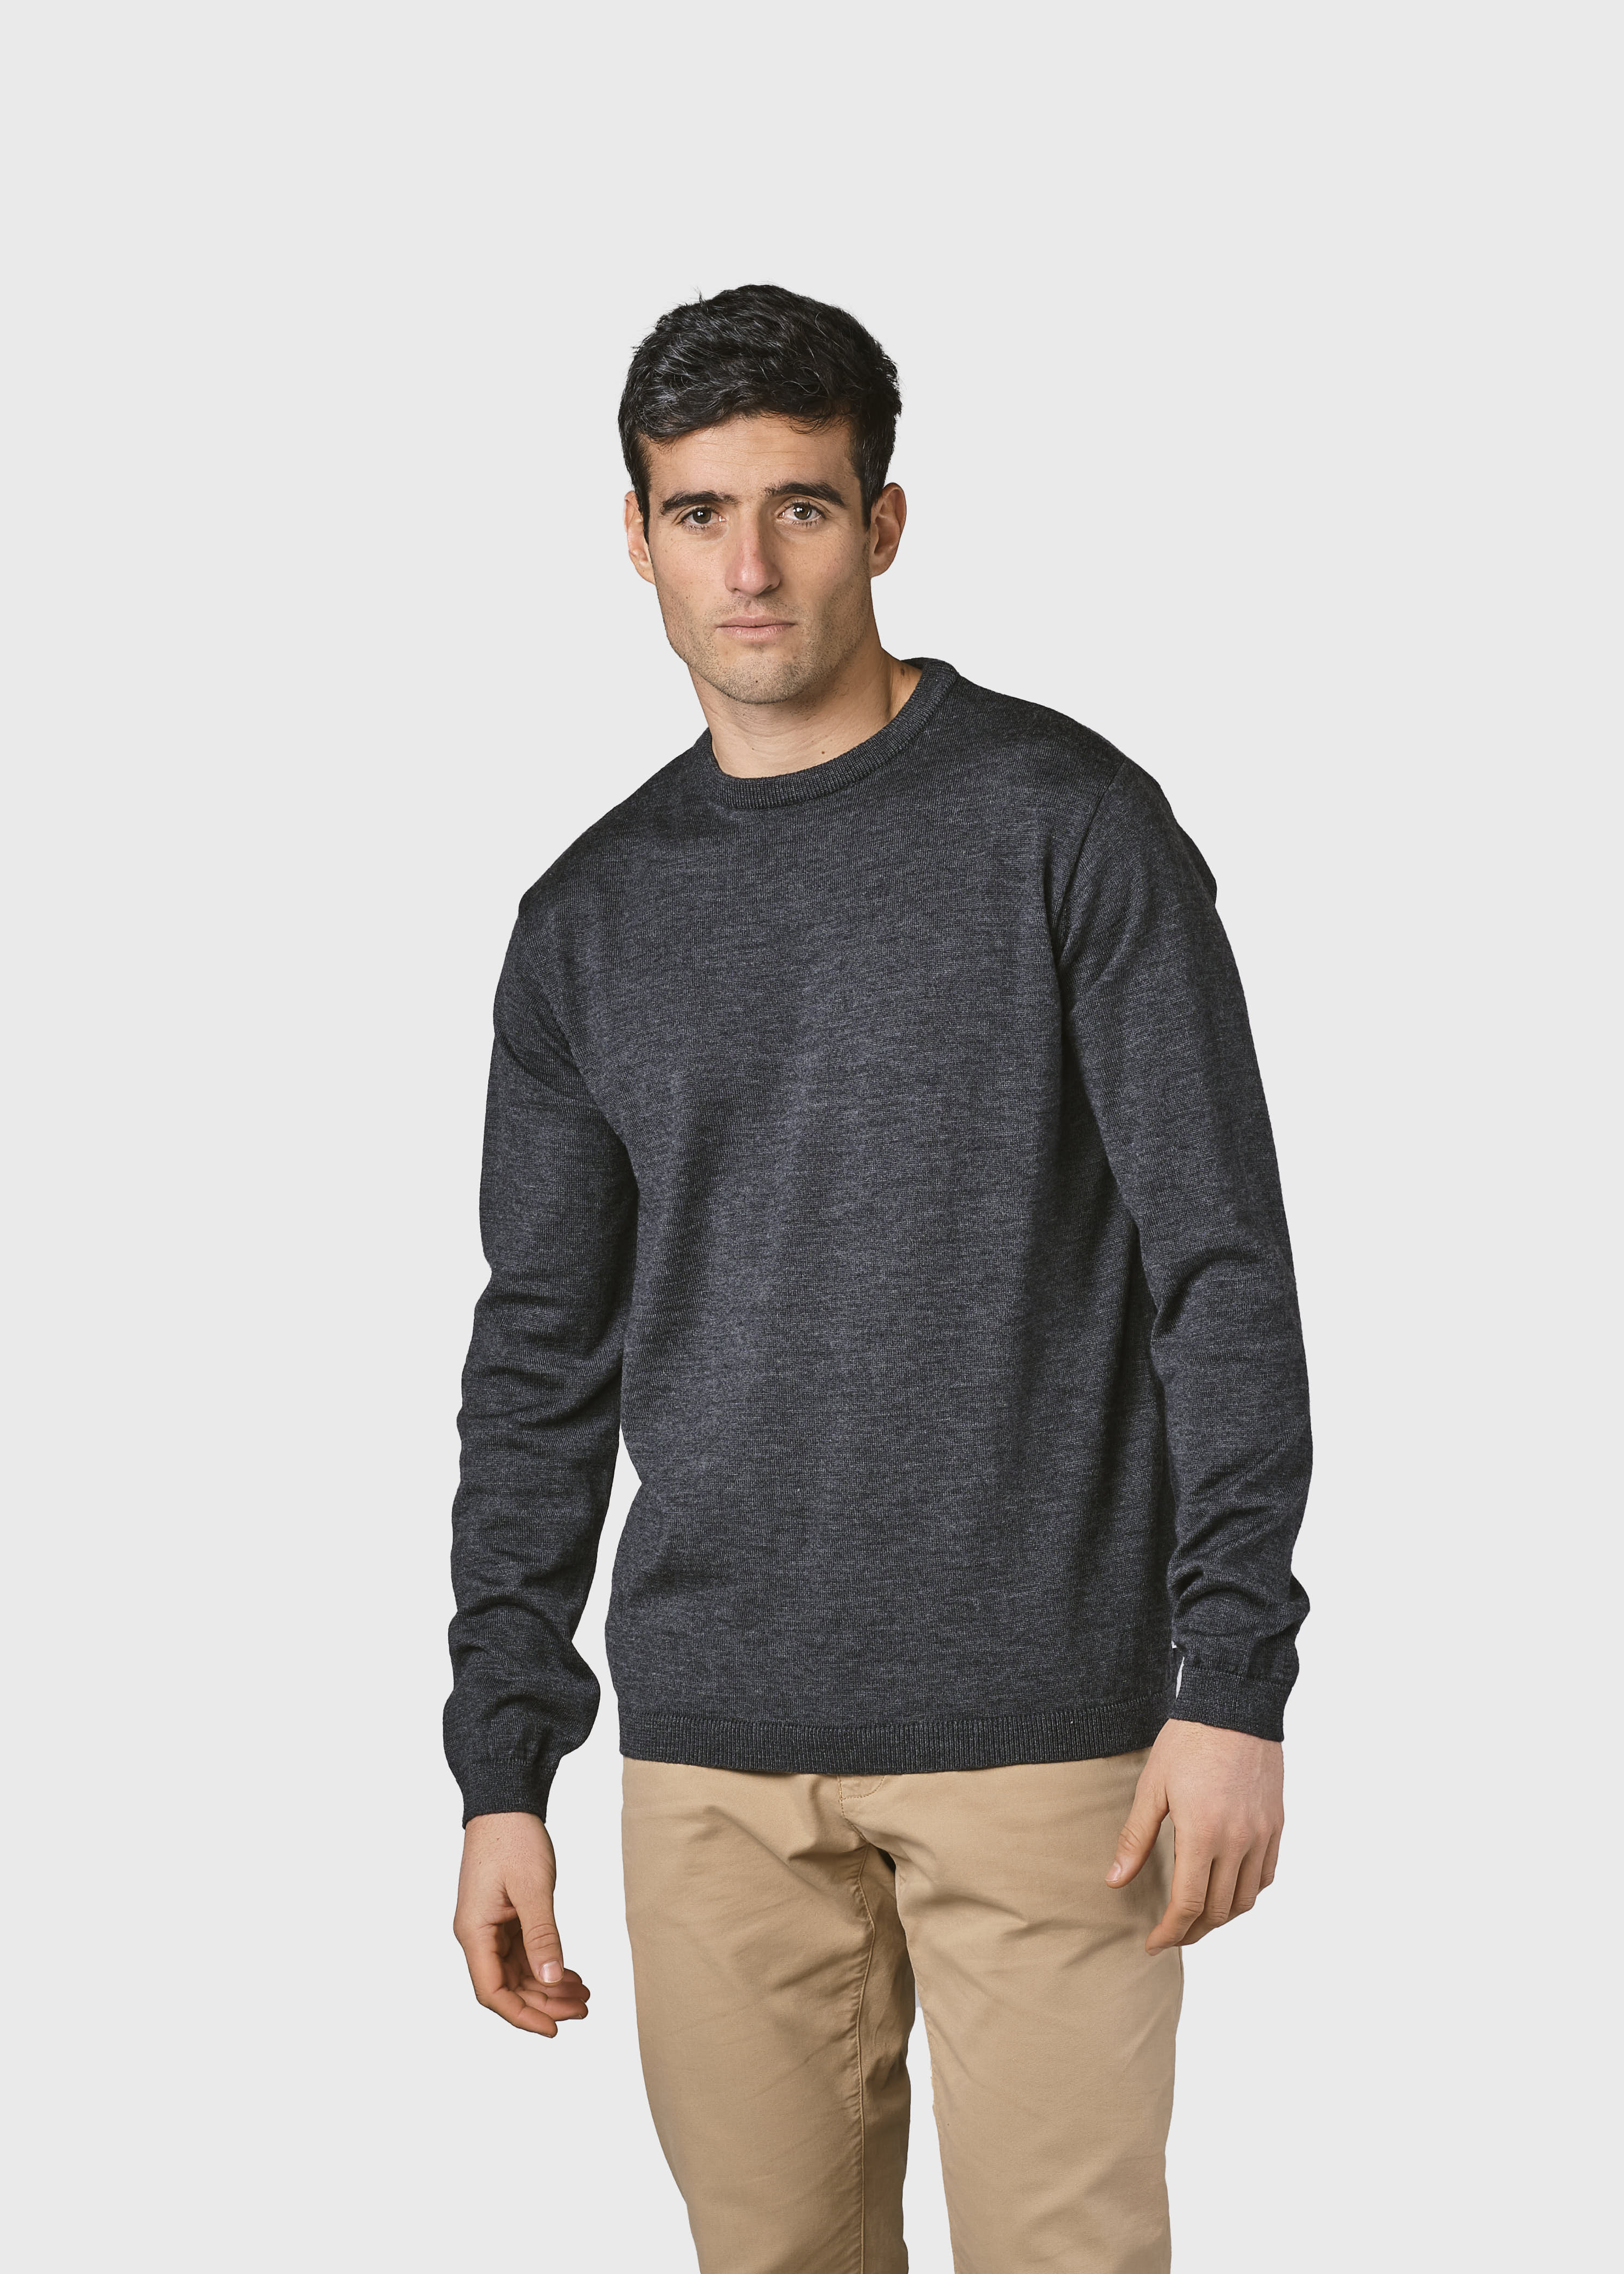 Herren-Strickpullover Mens basic merino knit Anthracite (100% Wolle)